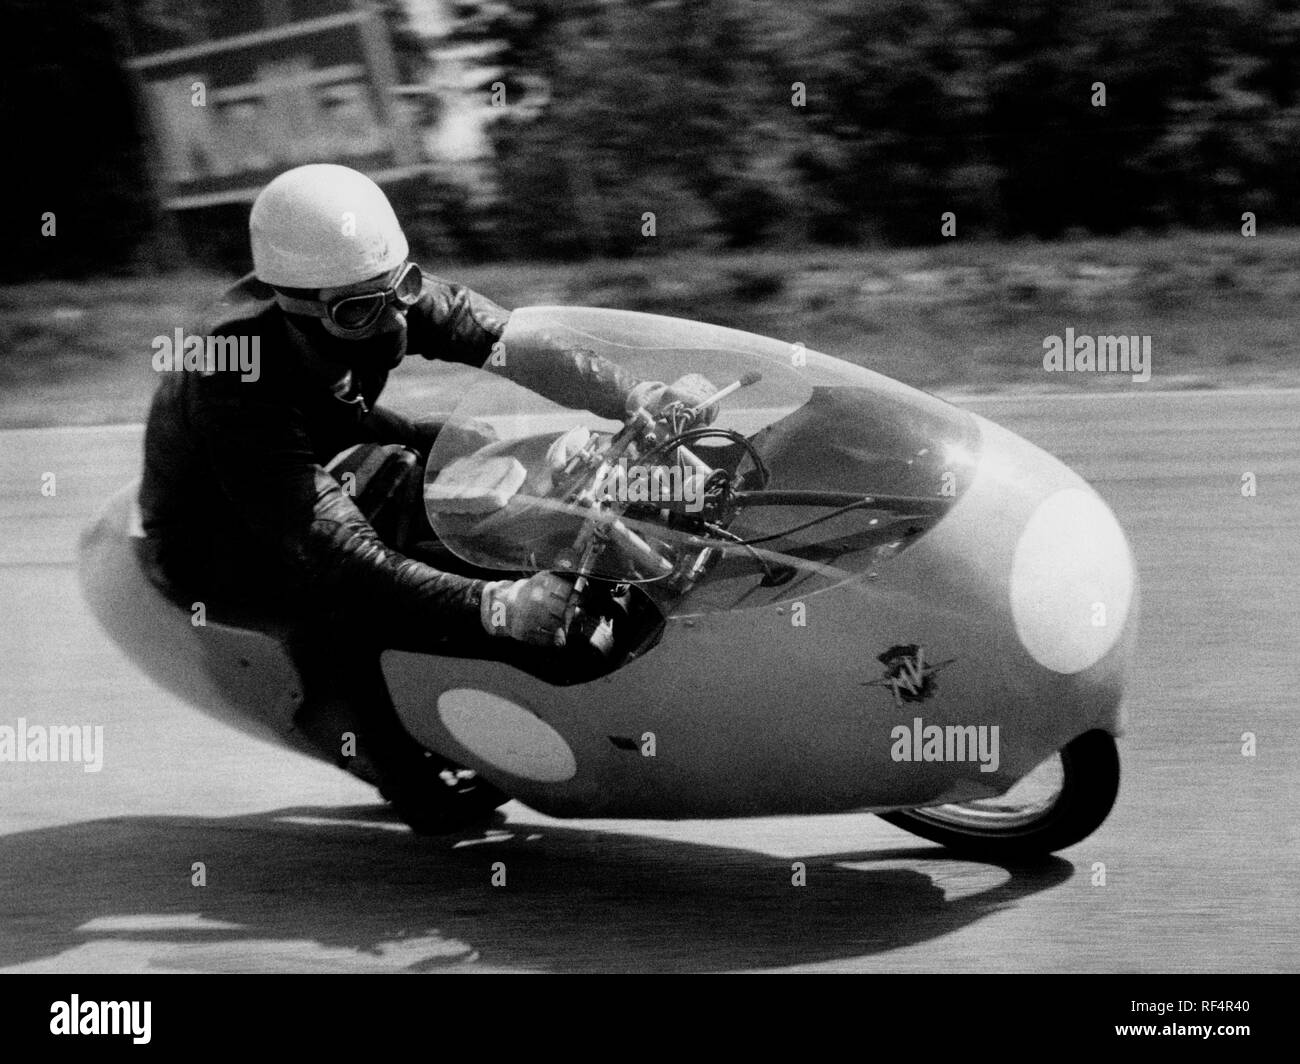 Carlo Ubbiali, Mv Agusta 125 cc, 1957 Stockfoto